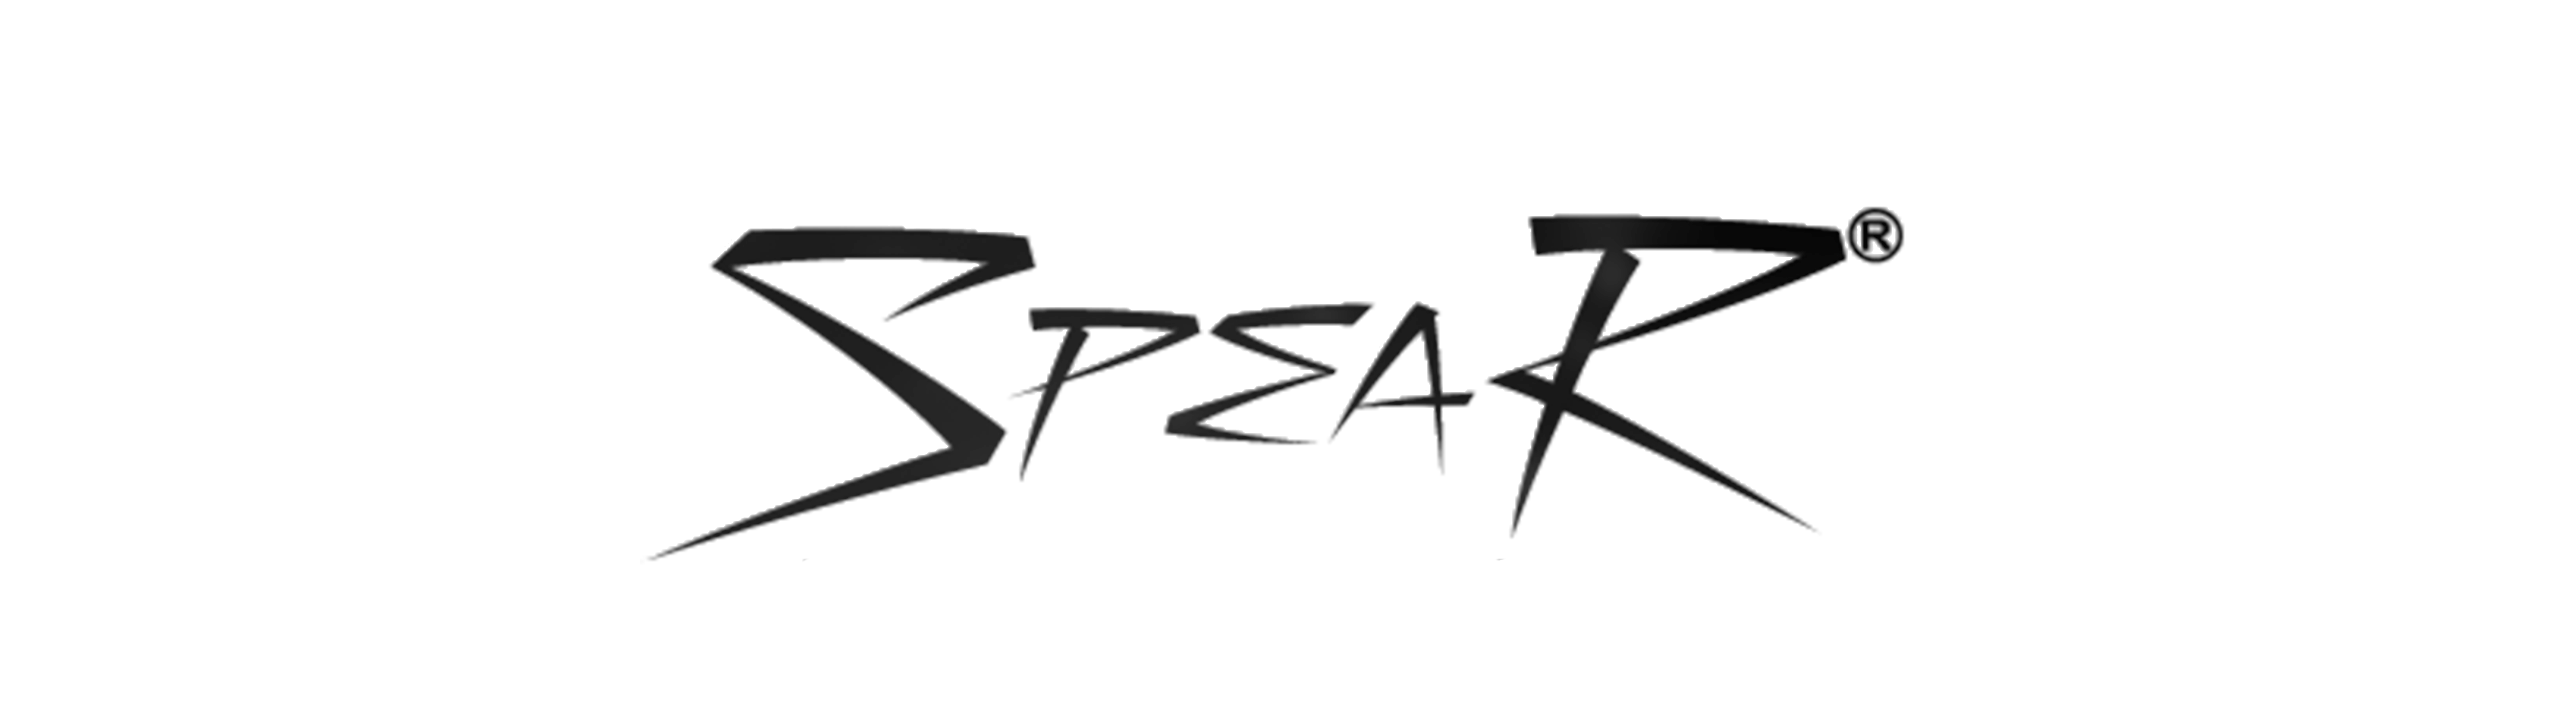 /brands/spear/